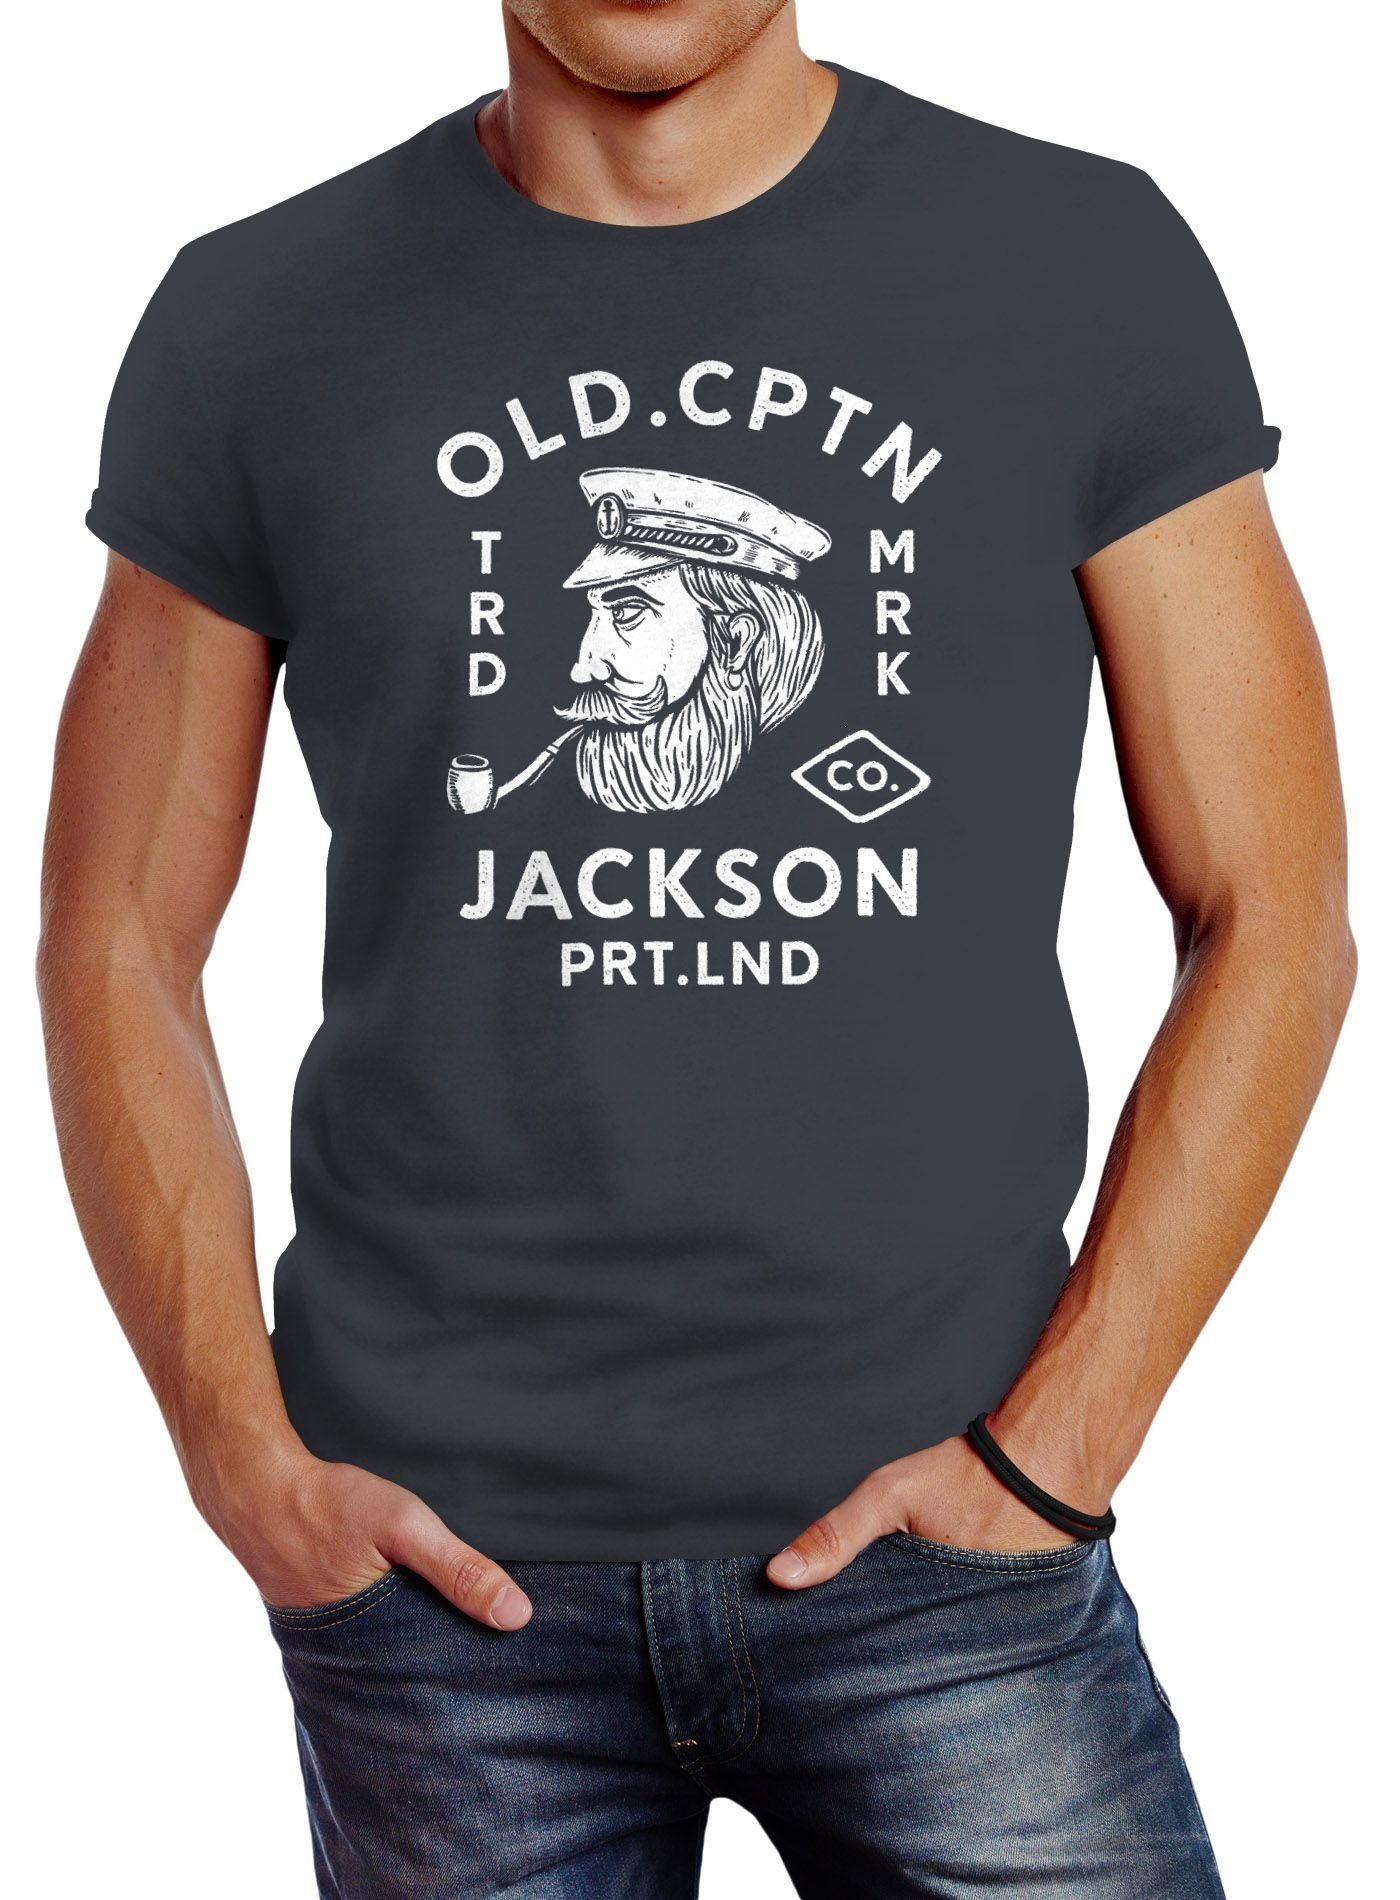 Neverless Print-Shirt Neverless® Herren T-Shirt Kapitän Motiv Aufdruck Old Cptn Jackson Retro Print-Shirt mit Print grau